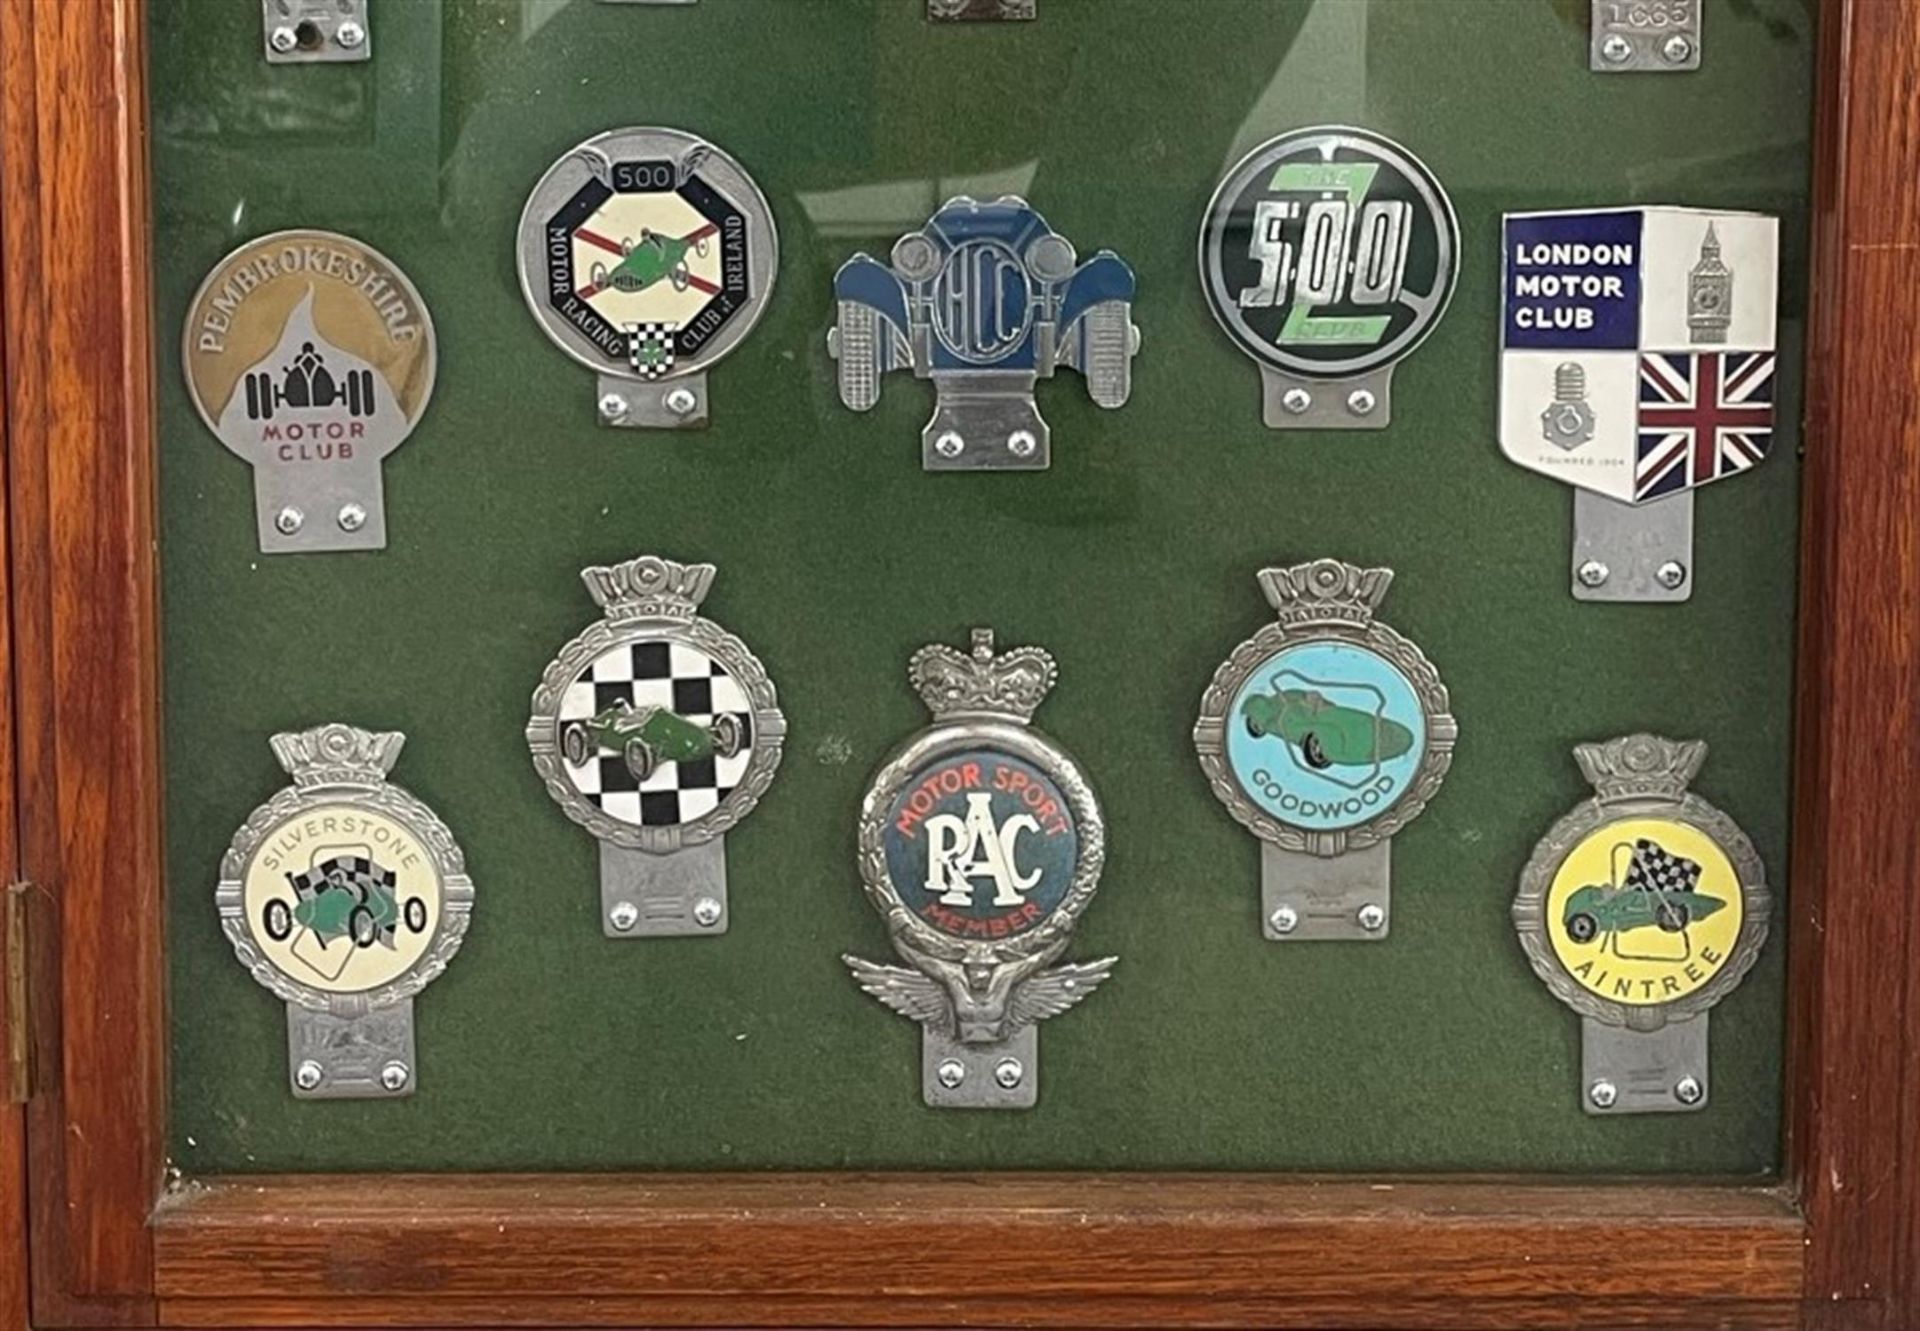 Cased Display of Motorsport Club Car Badges c.1940s - c.1960s - Image 3 of 4